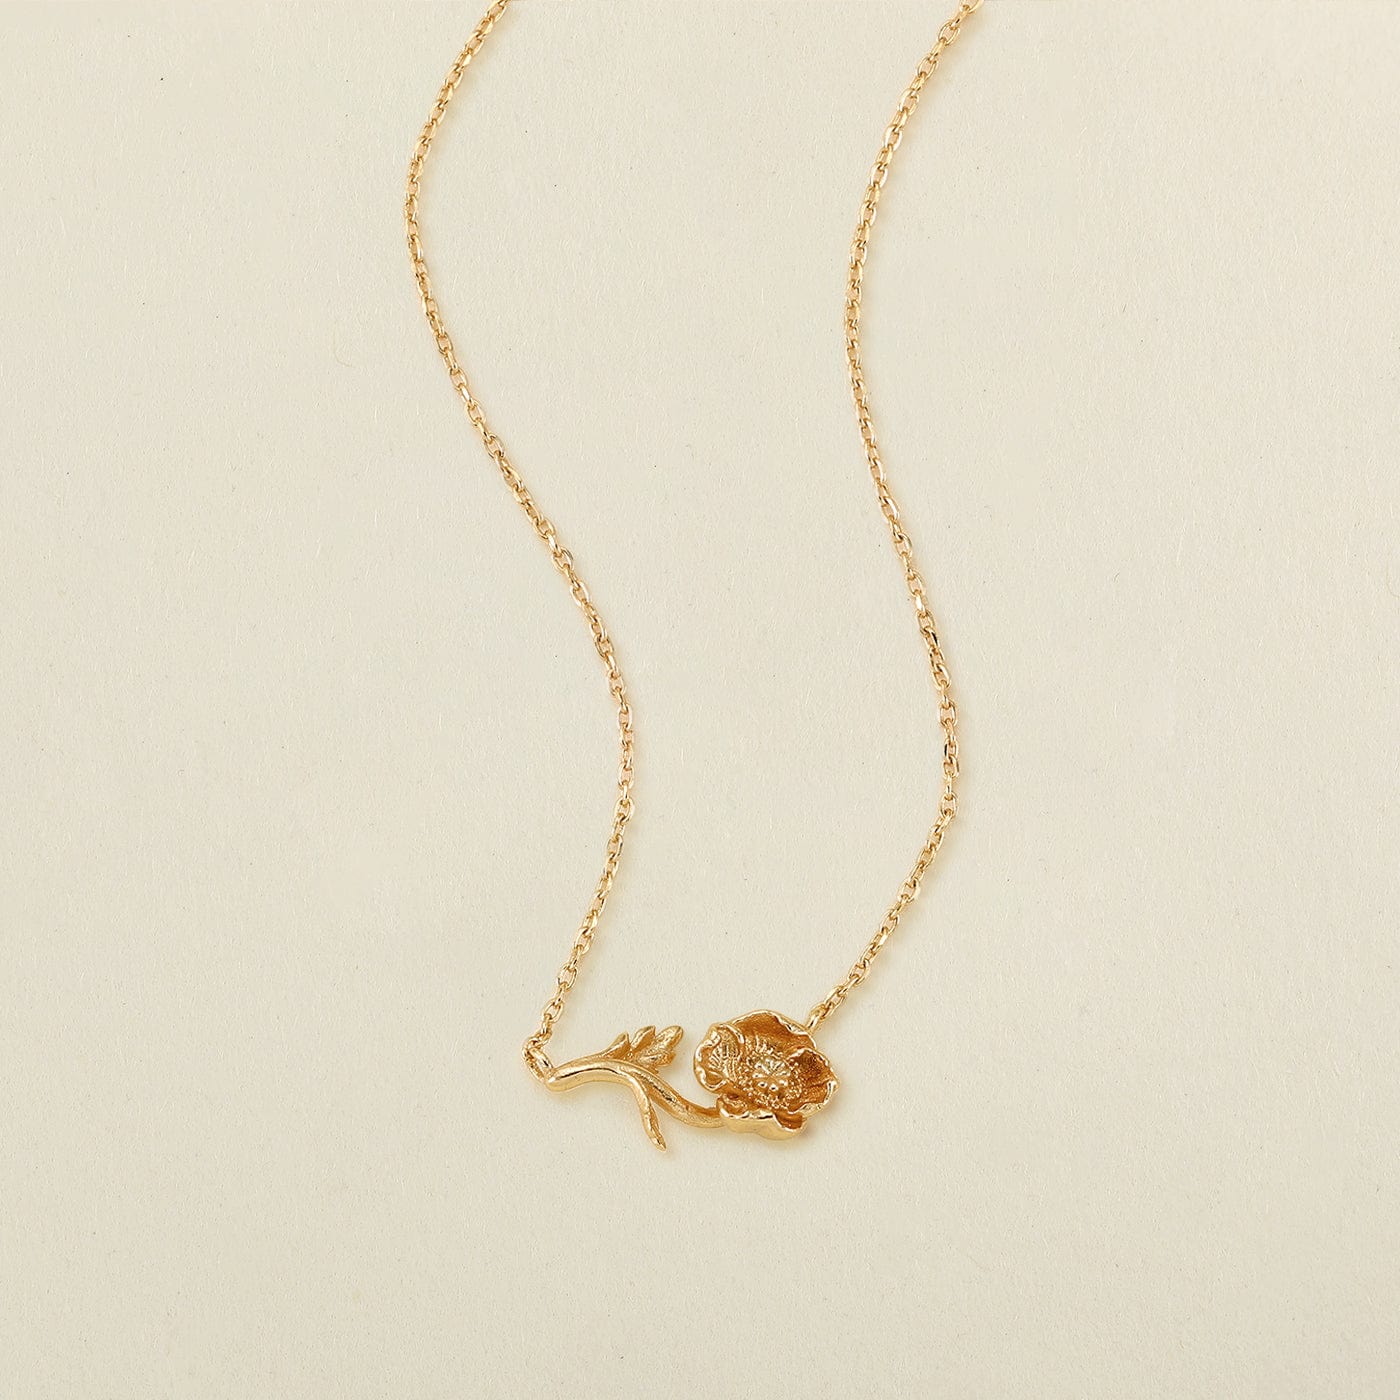 August Everbloom Birth Flower Necklace Gold Vermeil Necklace